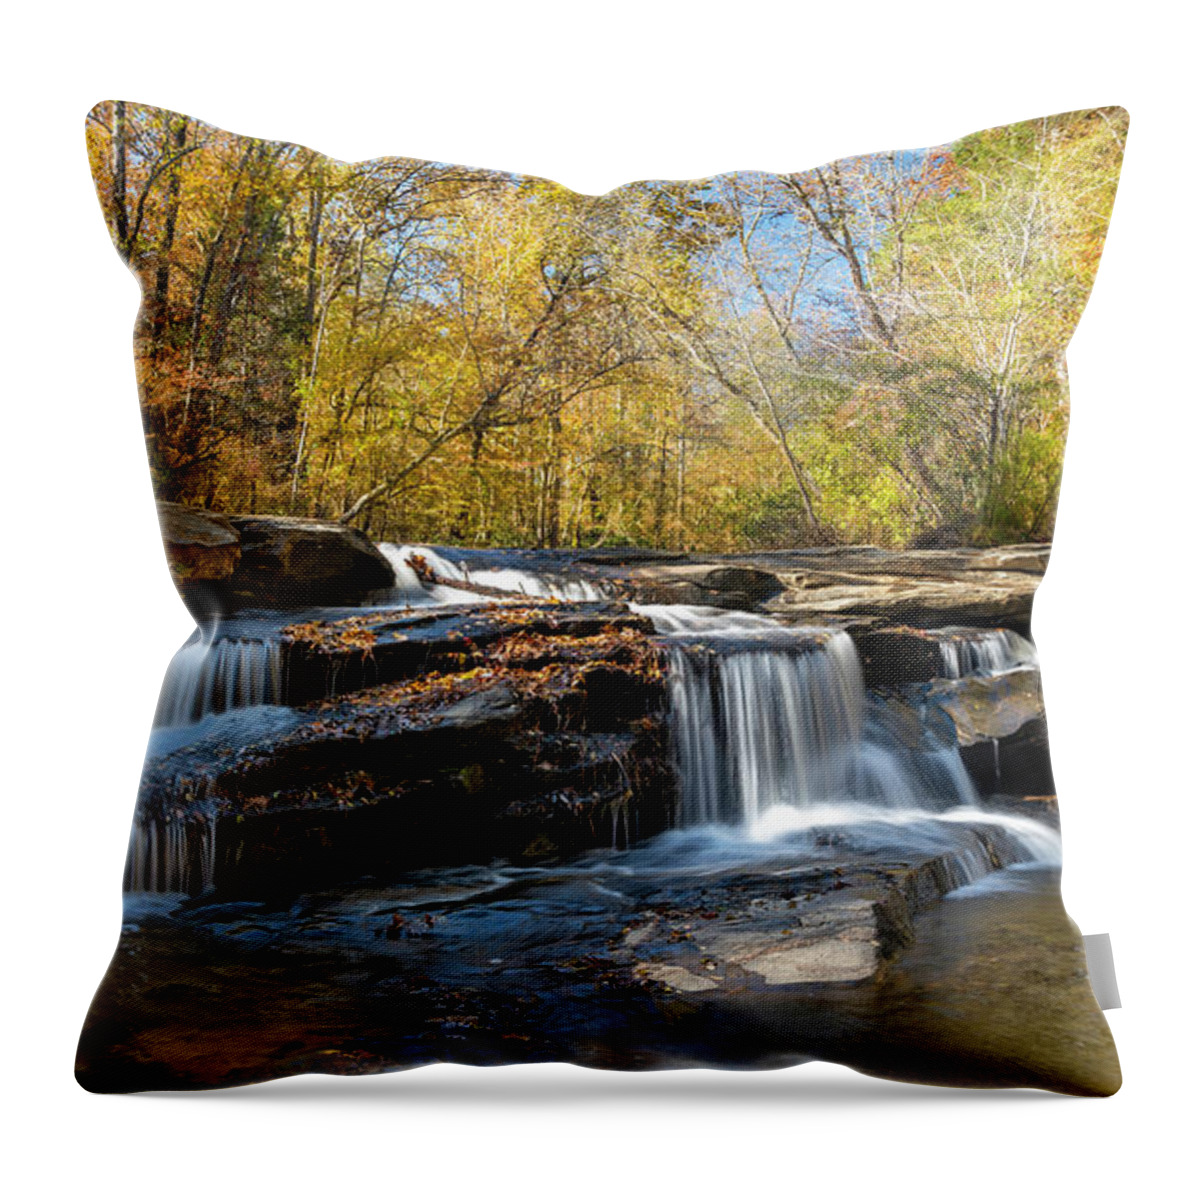 Horseshoe Falls Throw Pillow featuring the photograph Horseshoe Falls by Randall Allen